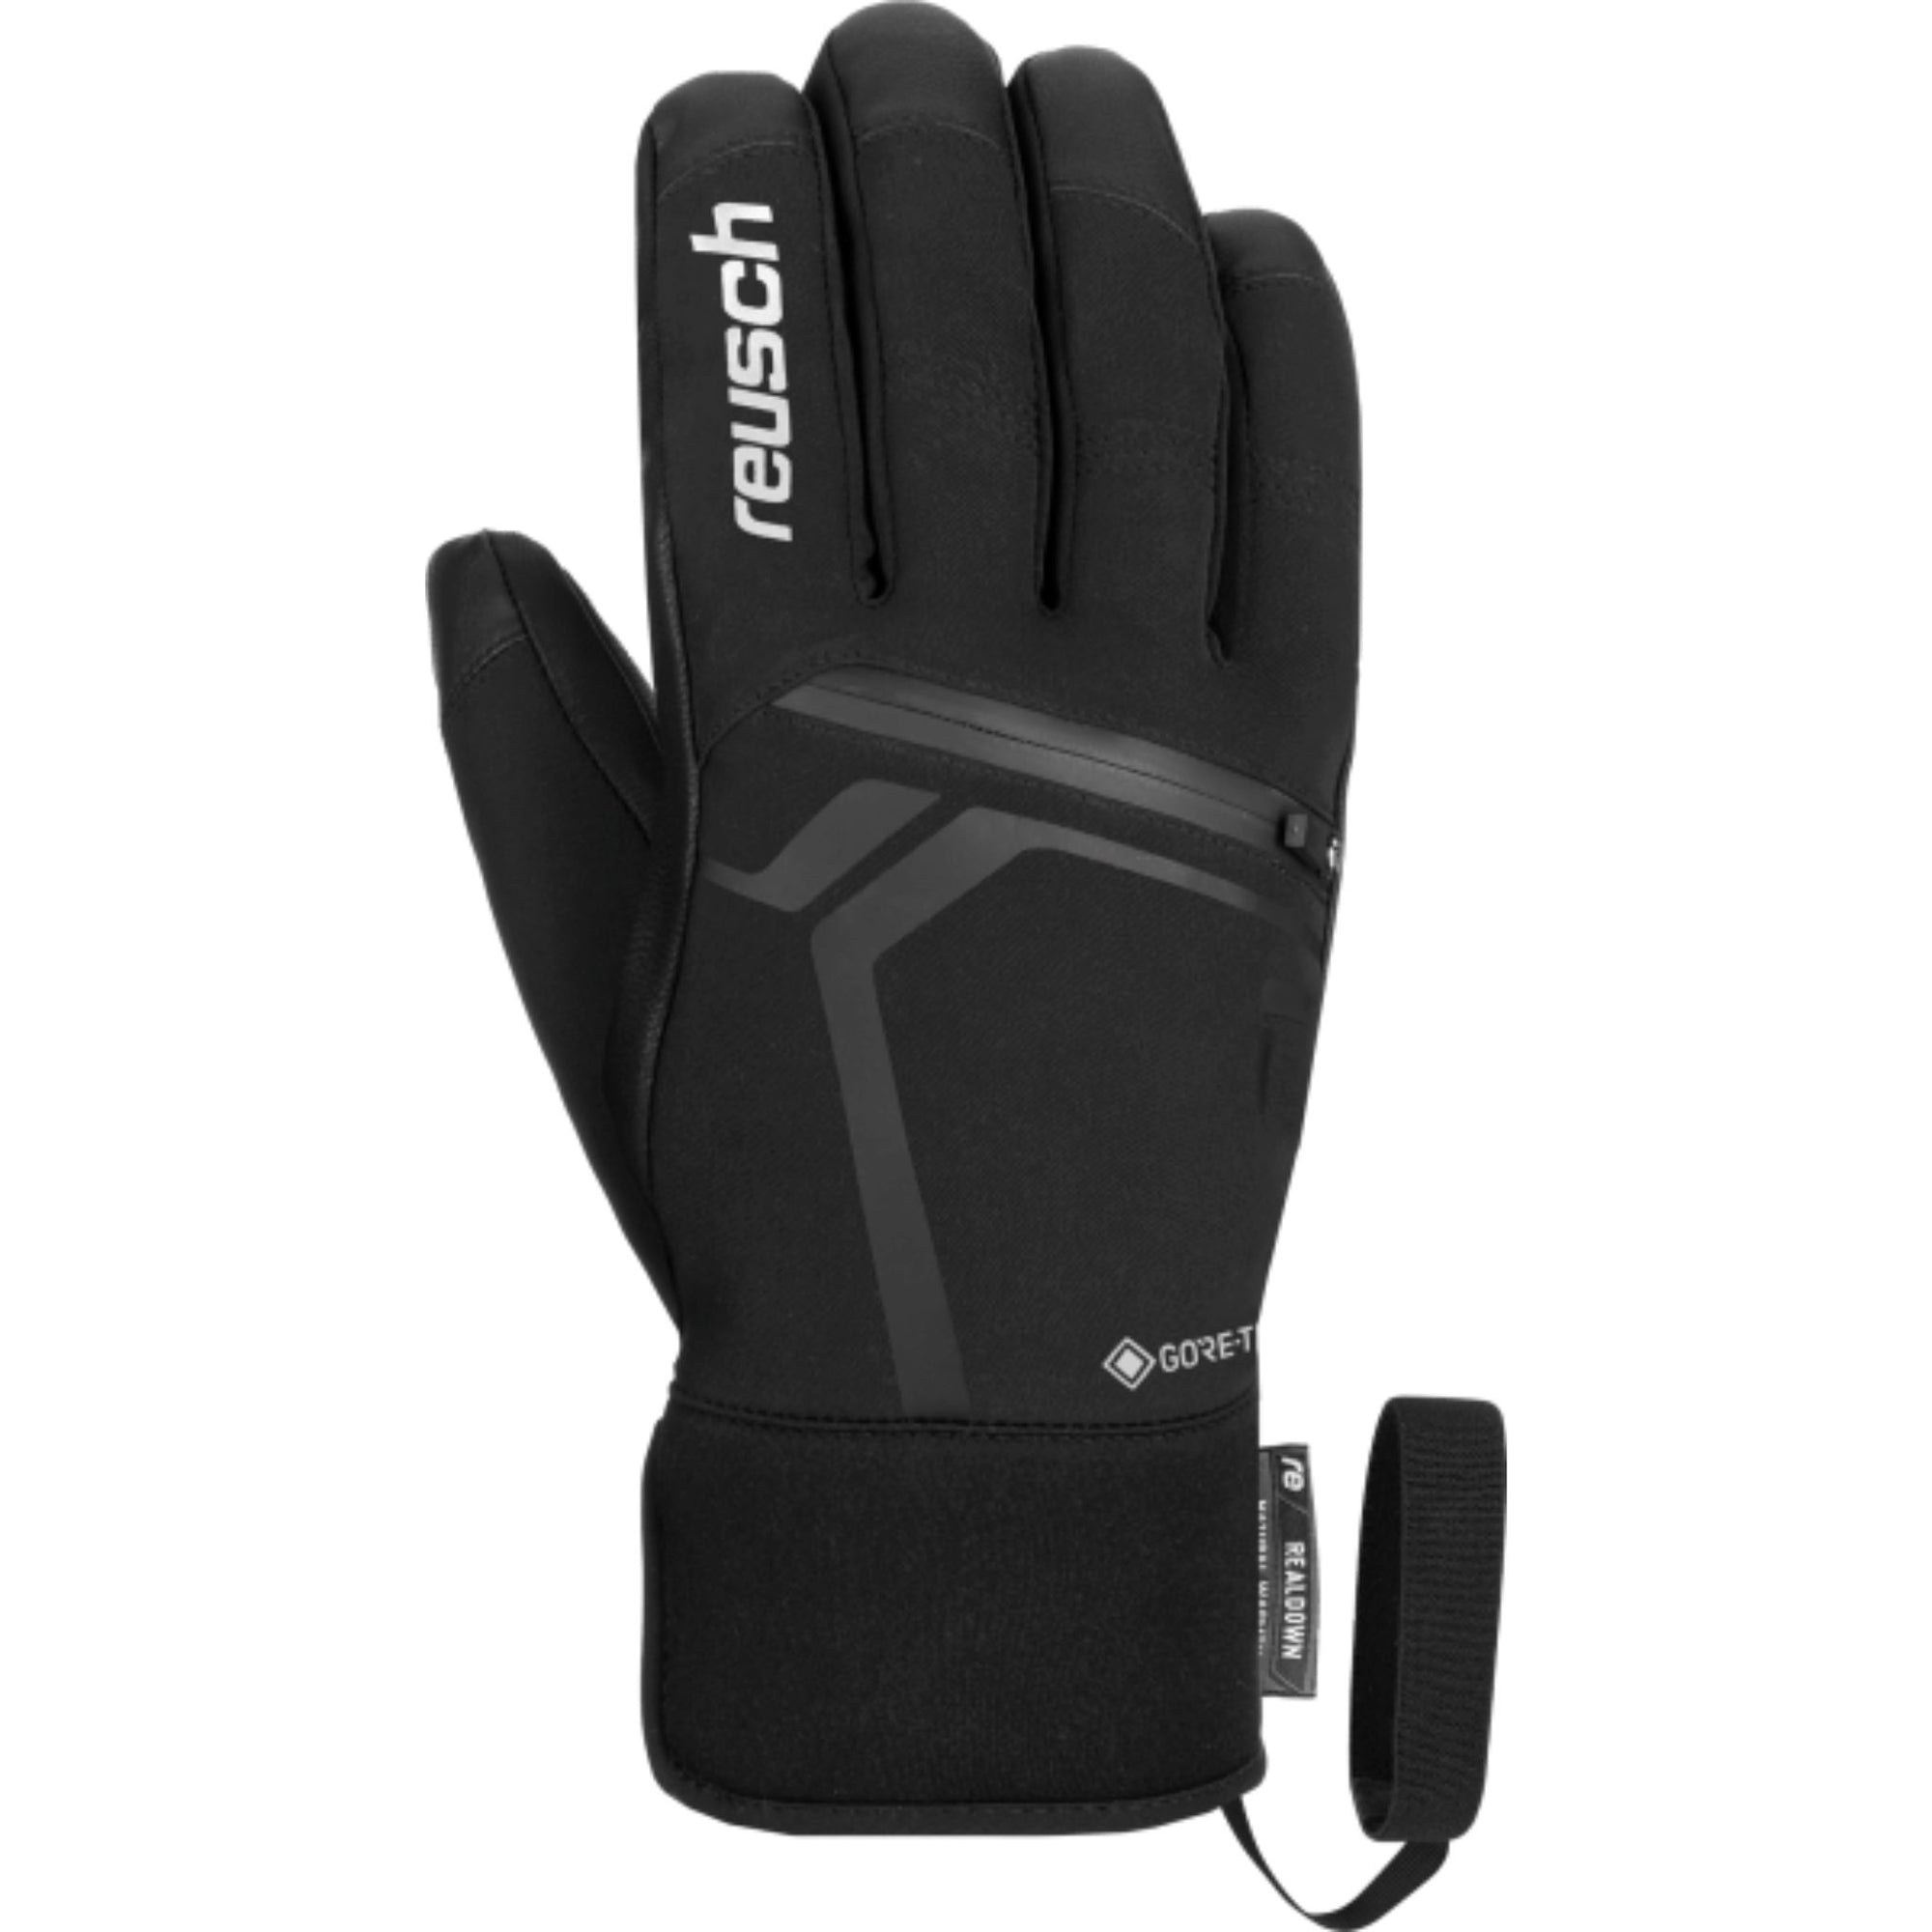 Reusch Down Spirit GORE-TEX Short Cuff Glove - Black/Silver Gloves Reusch S / 7.0 